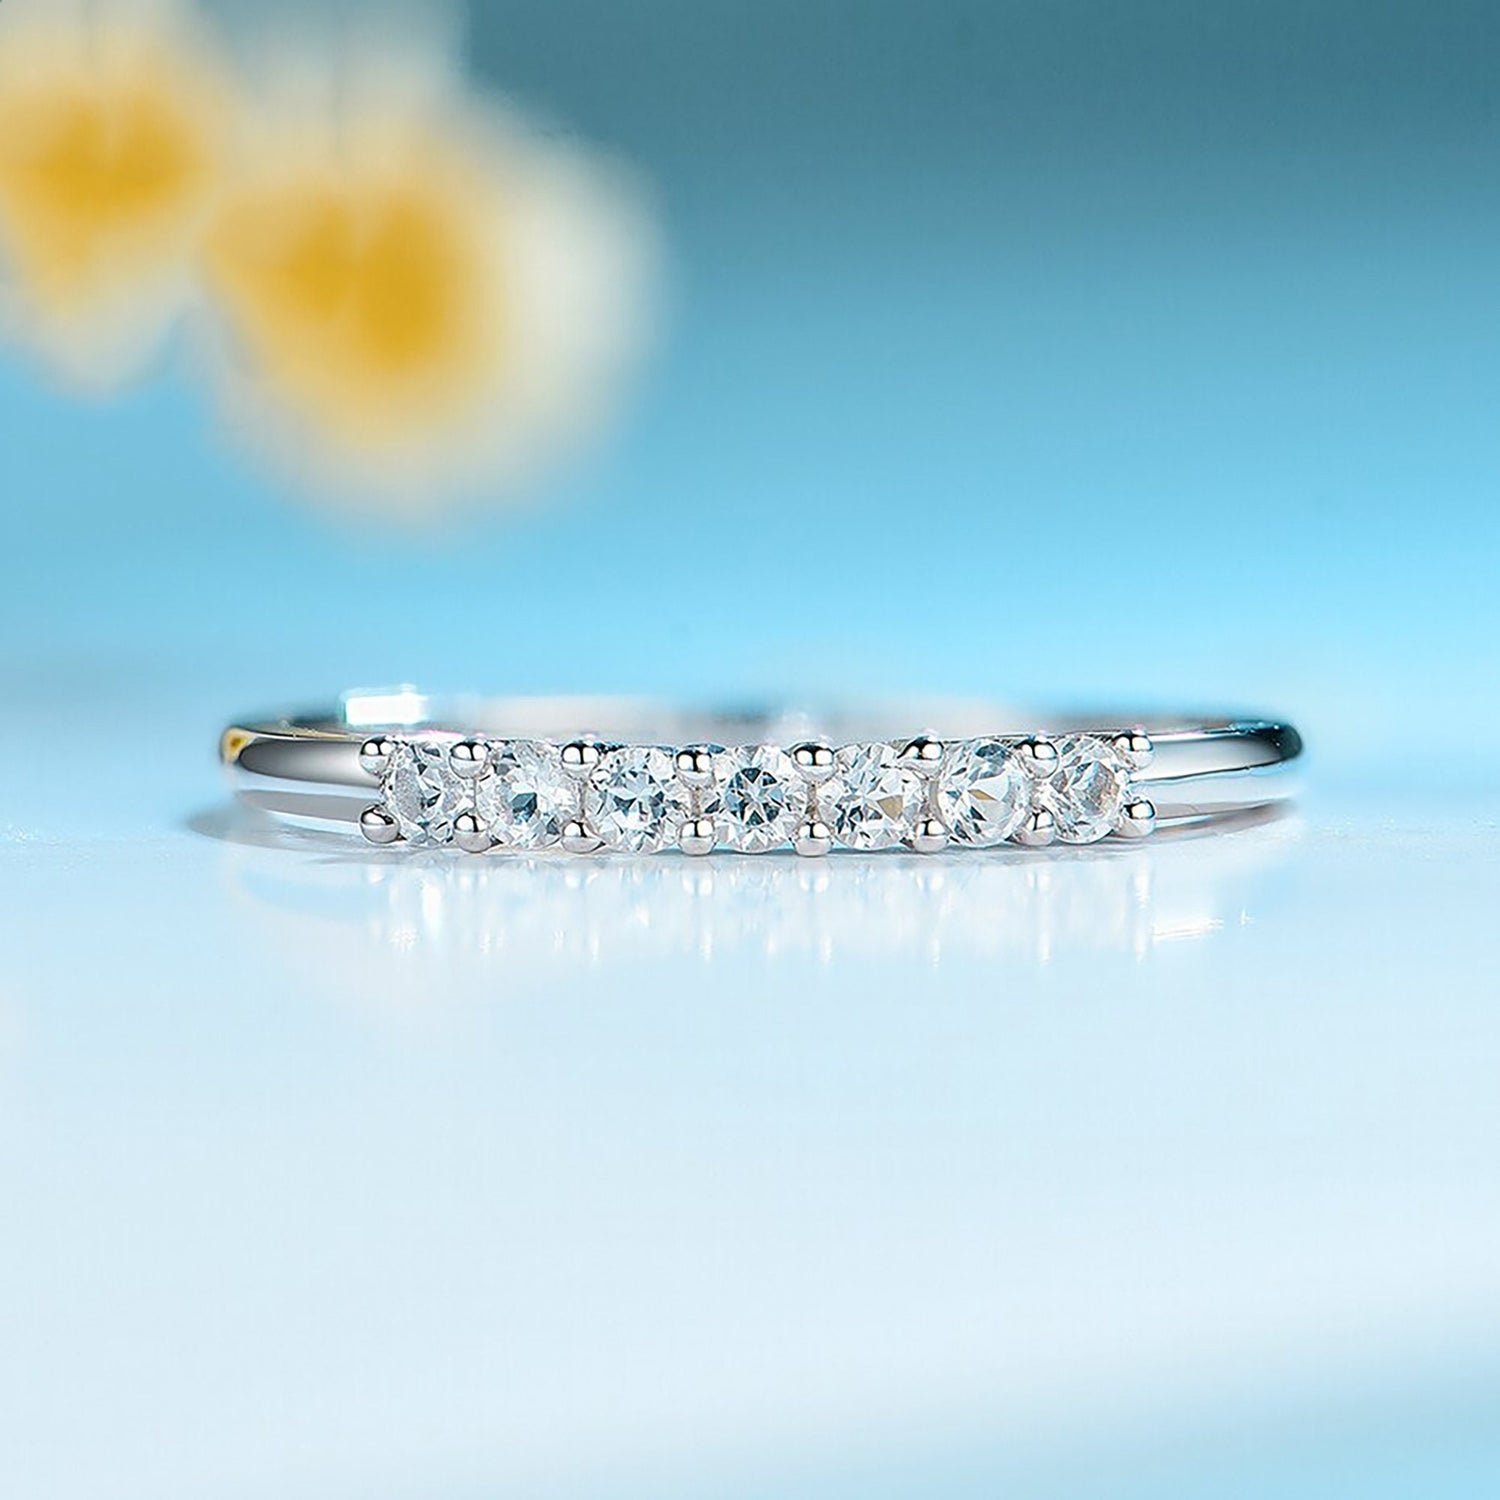 White Topaz Ring \Topaz Moissanite Gemstone Ring \ Solid Silver Topaz Ring \ 925 Sterling Silver \ Engagement Ring